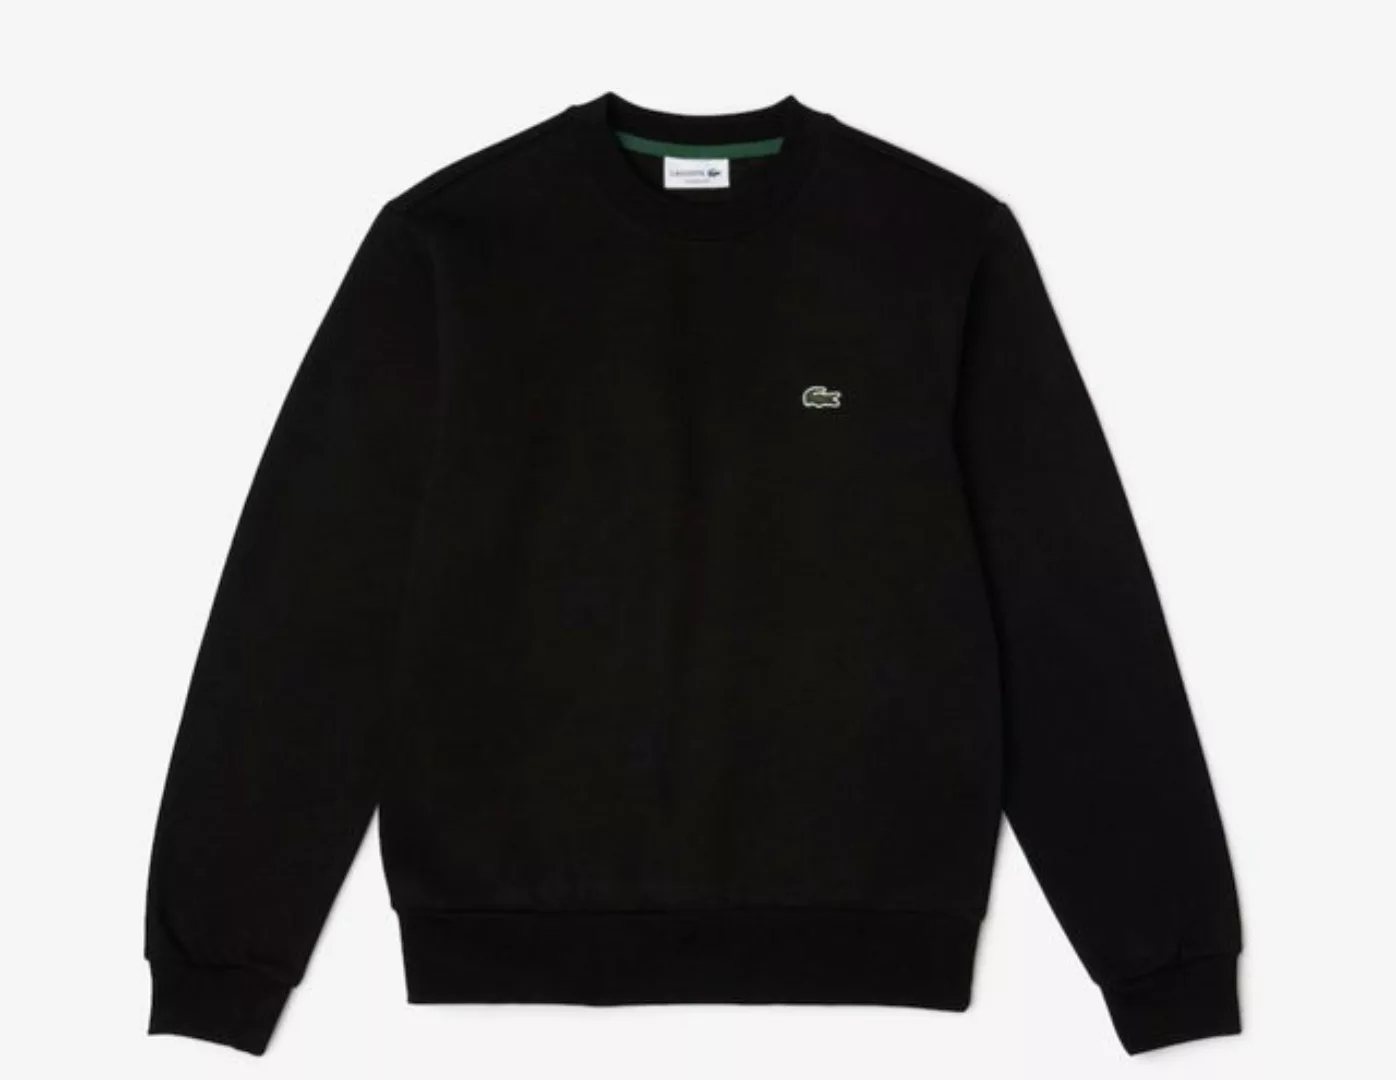 Lacoste Sweater Lacoste Small Logo Sweatshirt günstig online kaufen